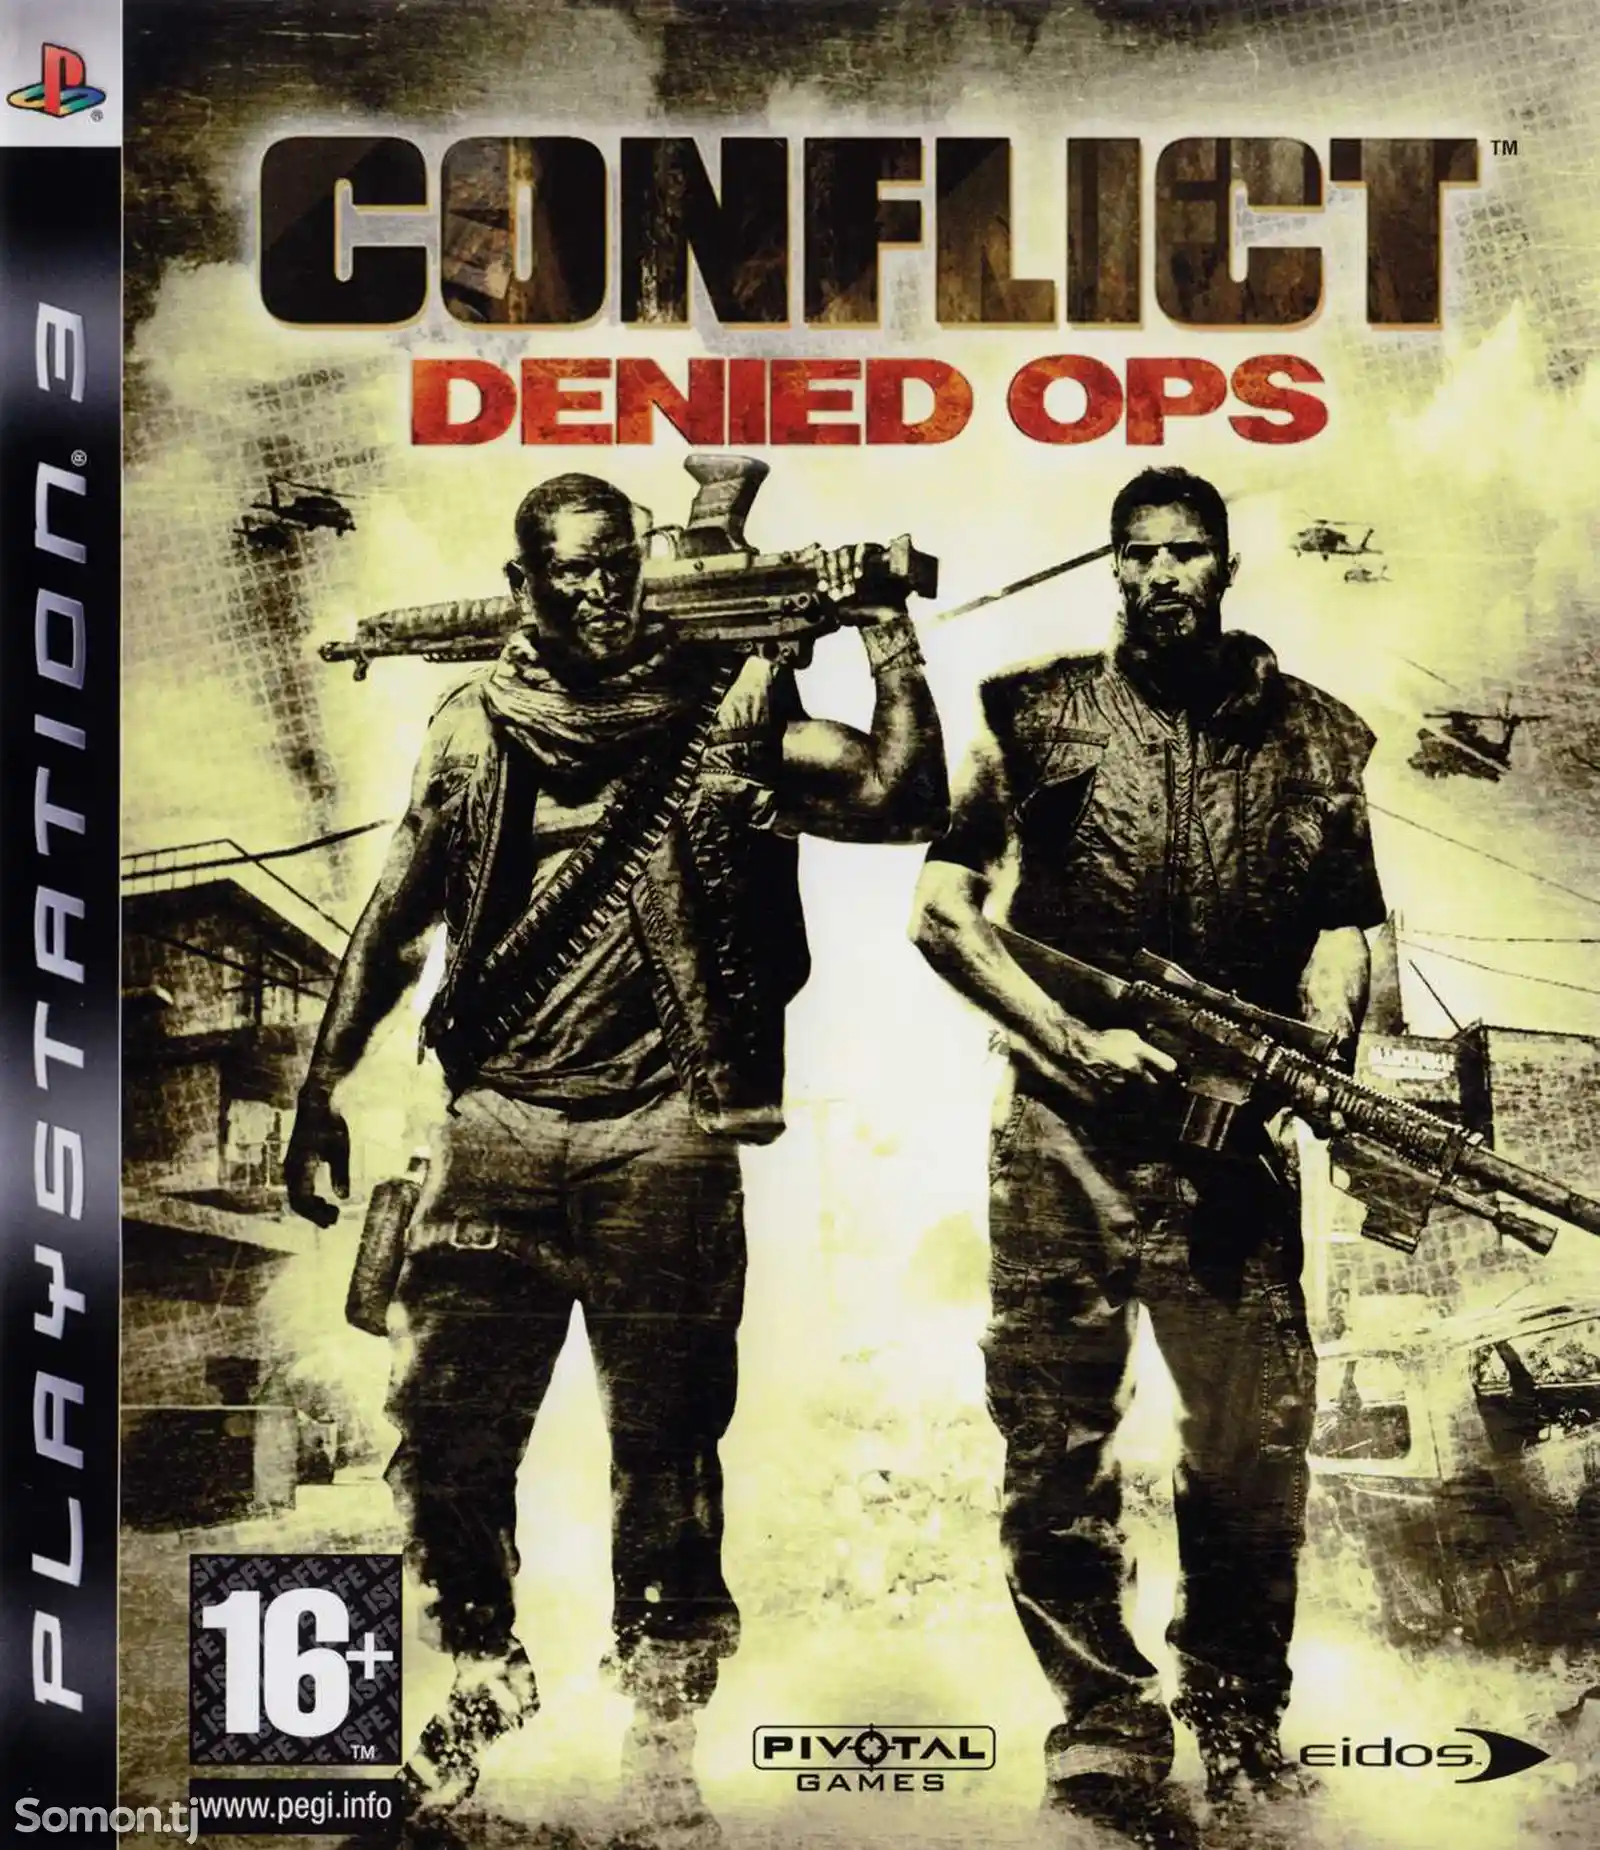 Игра Conflict Denied Ops на всех моделей Play Station-3